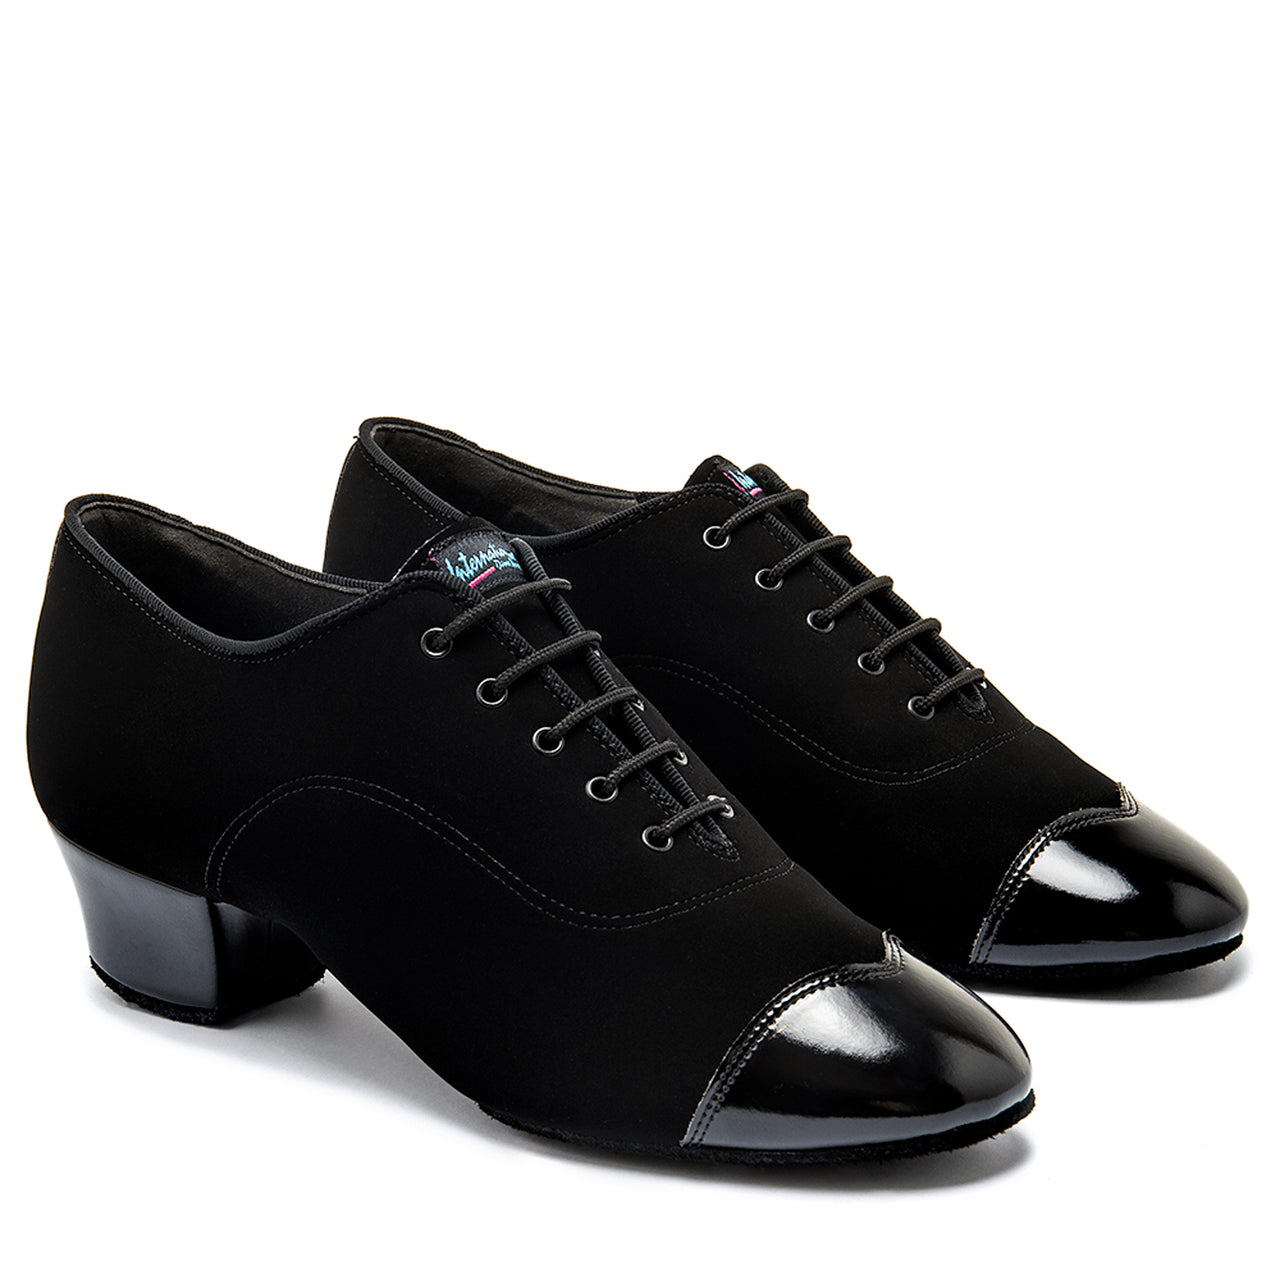 International Dance Shoes IDS Rumba Duo Men's Latin Shoe with Sleek Black Nubuck and Patent Two-Tone Design